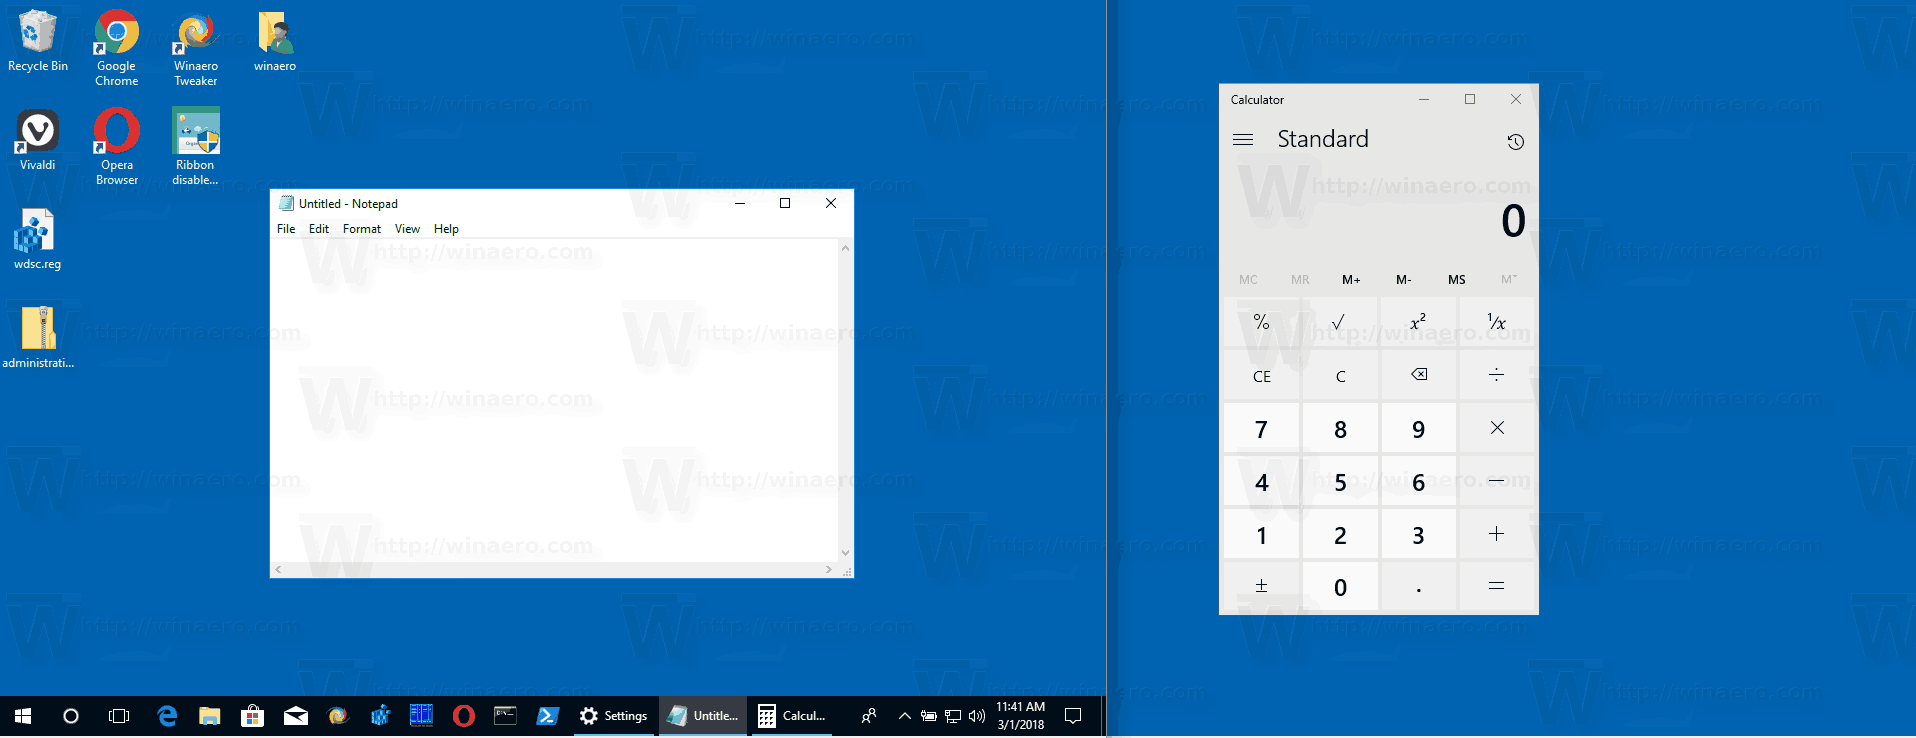 Taskbar On Main Display In Windows 10